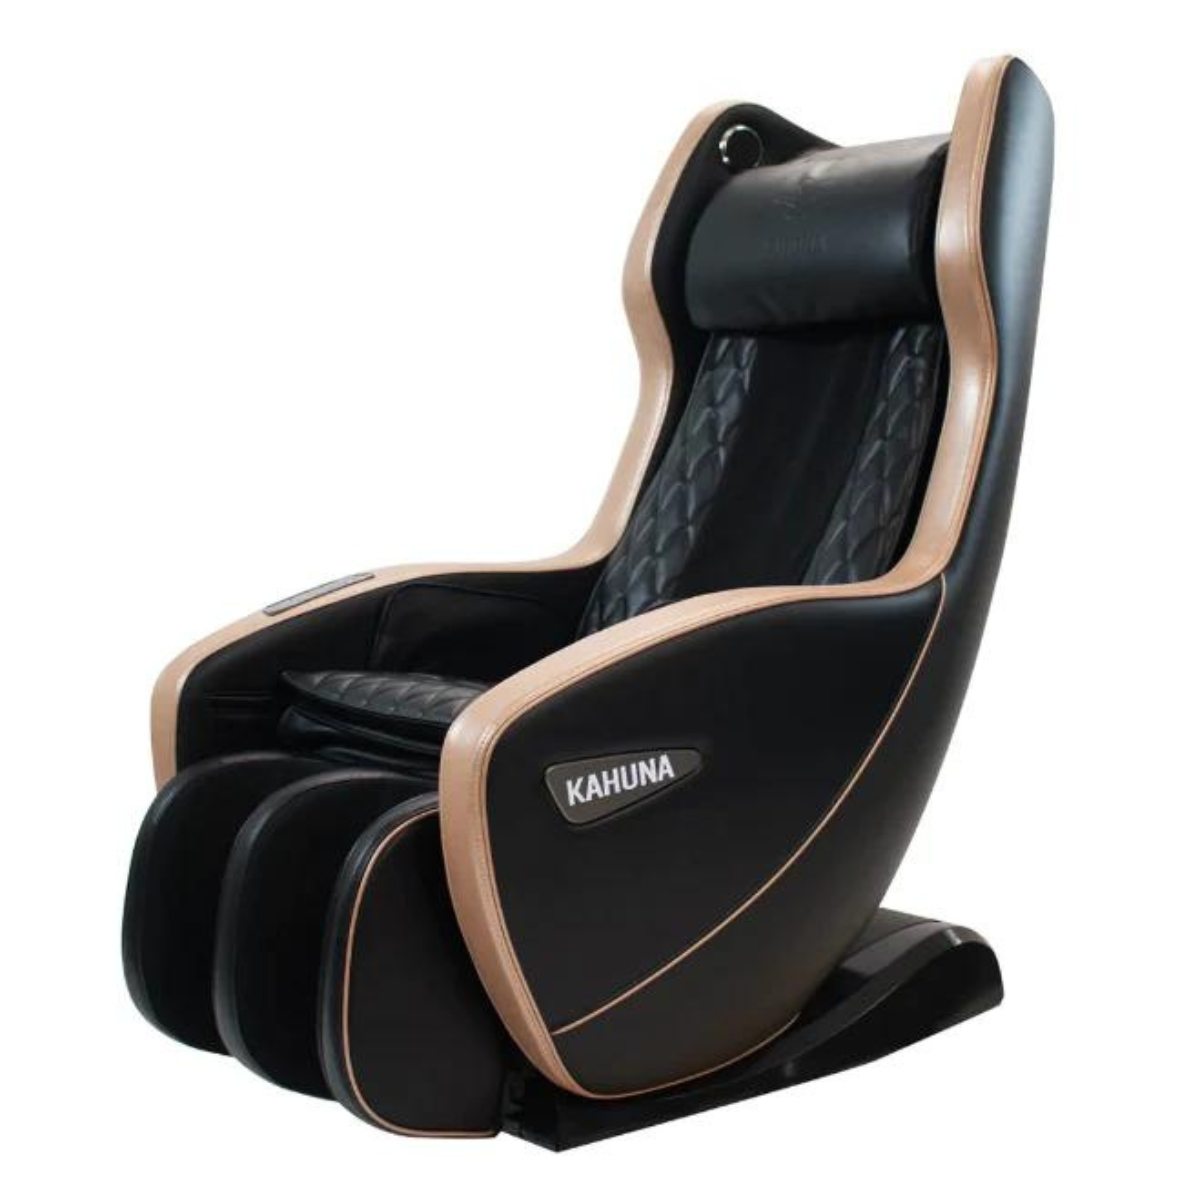 Kahuna Massage Chair - Hani3800